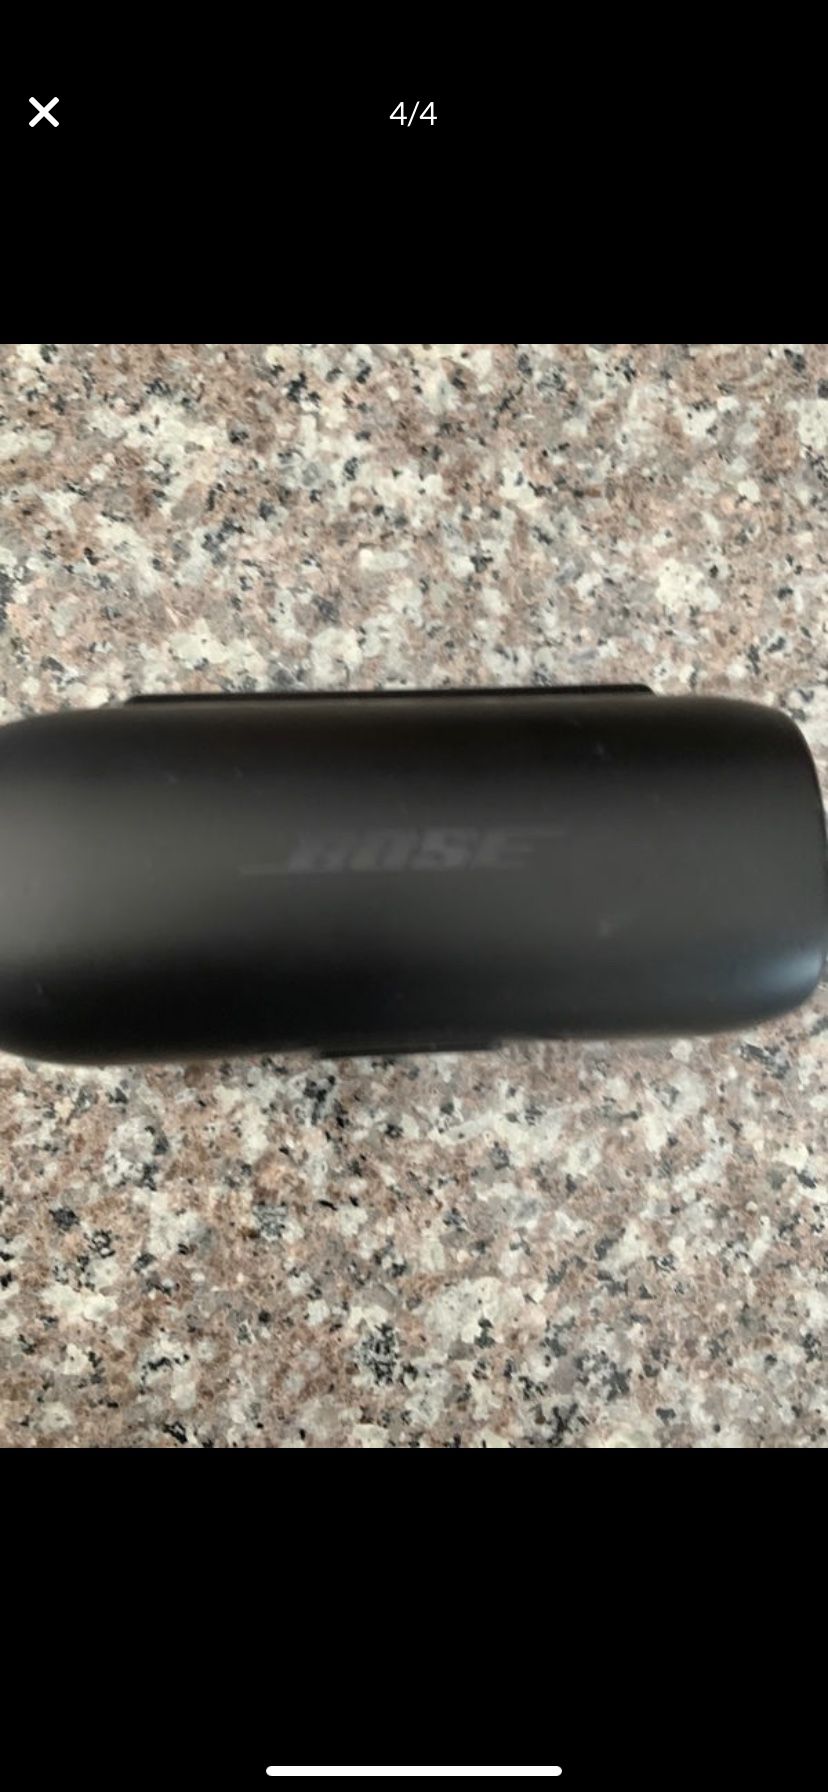 Bose SoundSport Head Phones